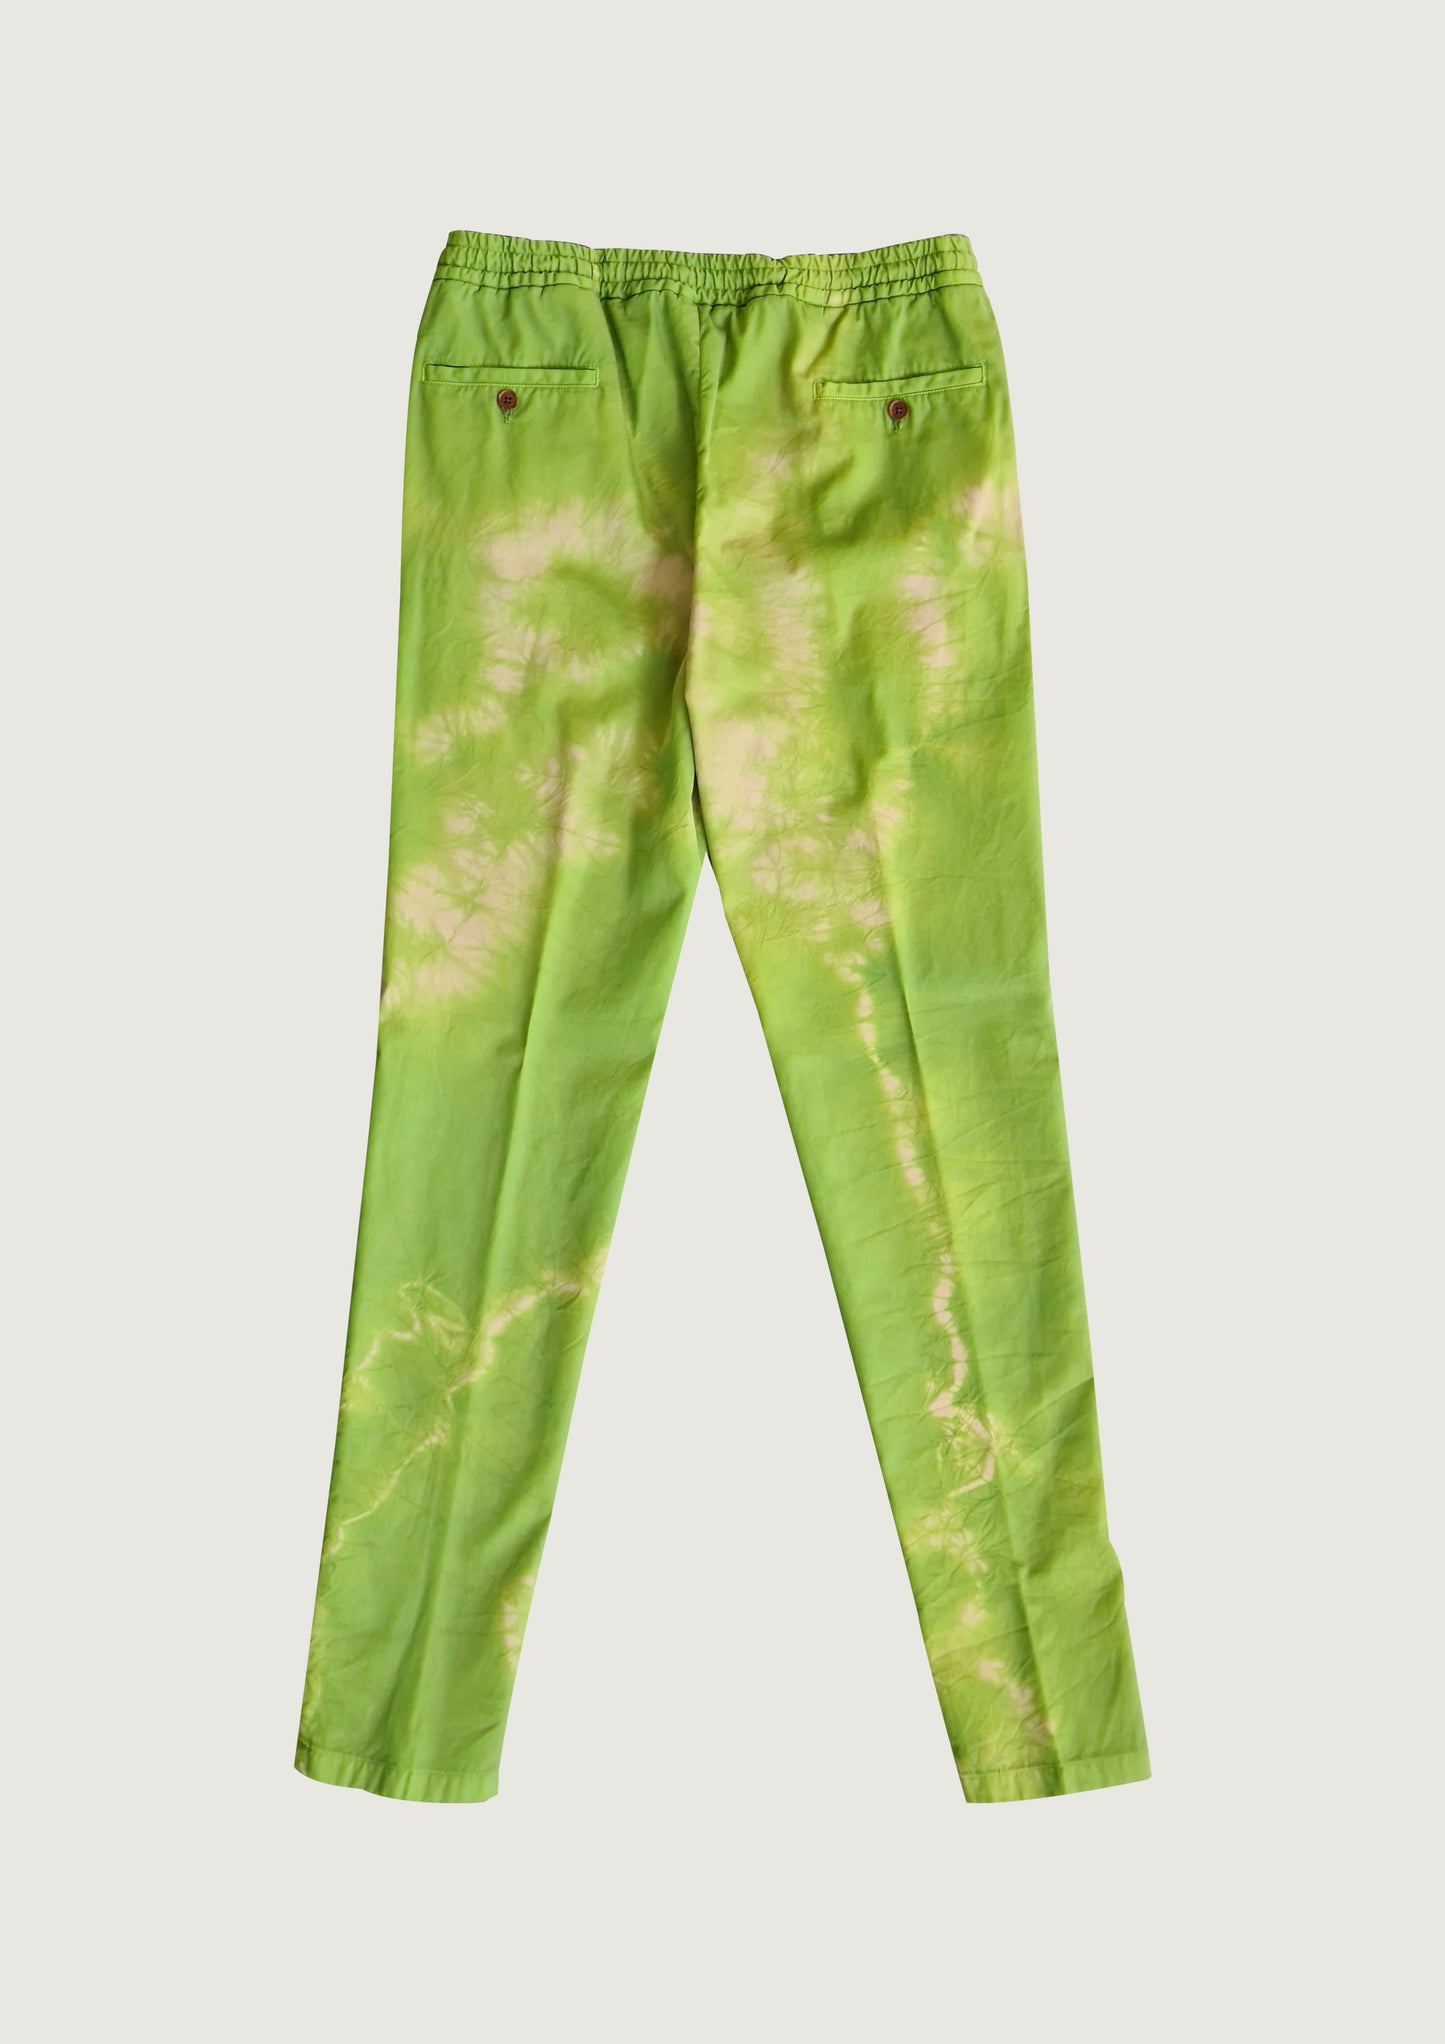 Pantalone Uomo green tye-die